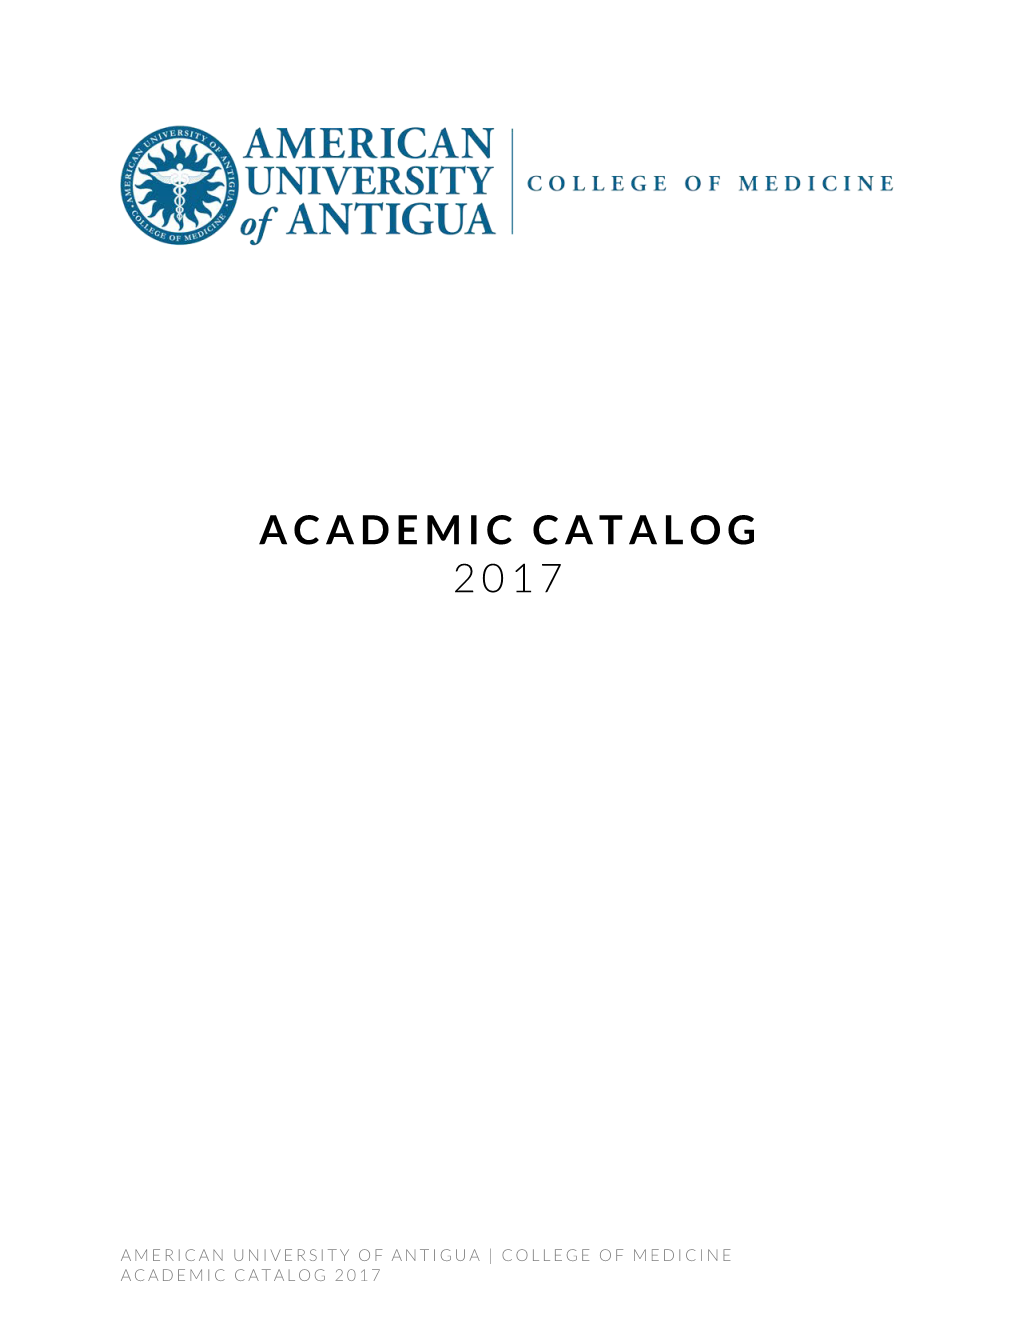 Academic Catalog 2017